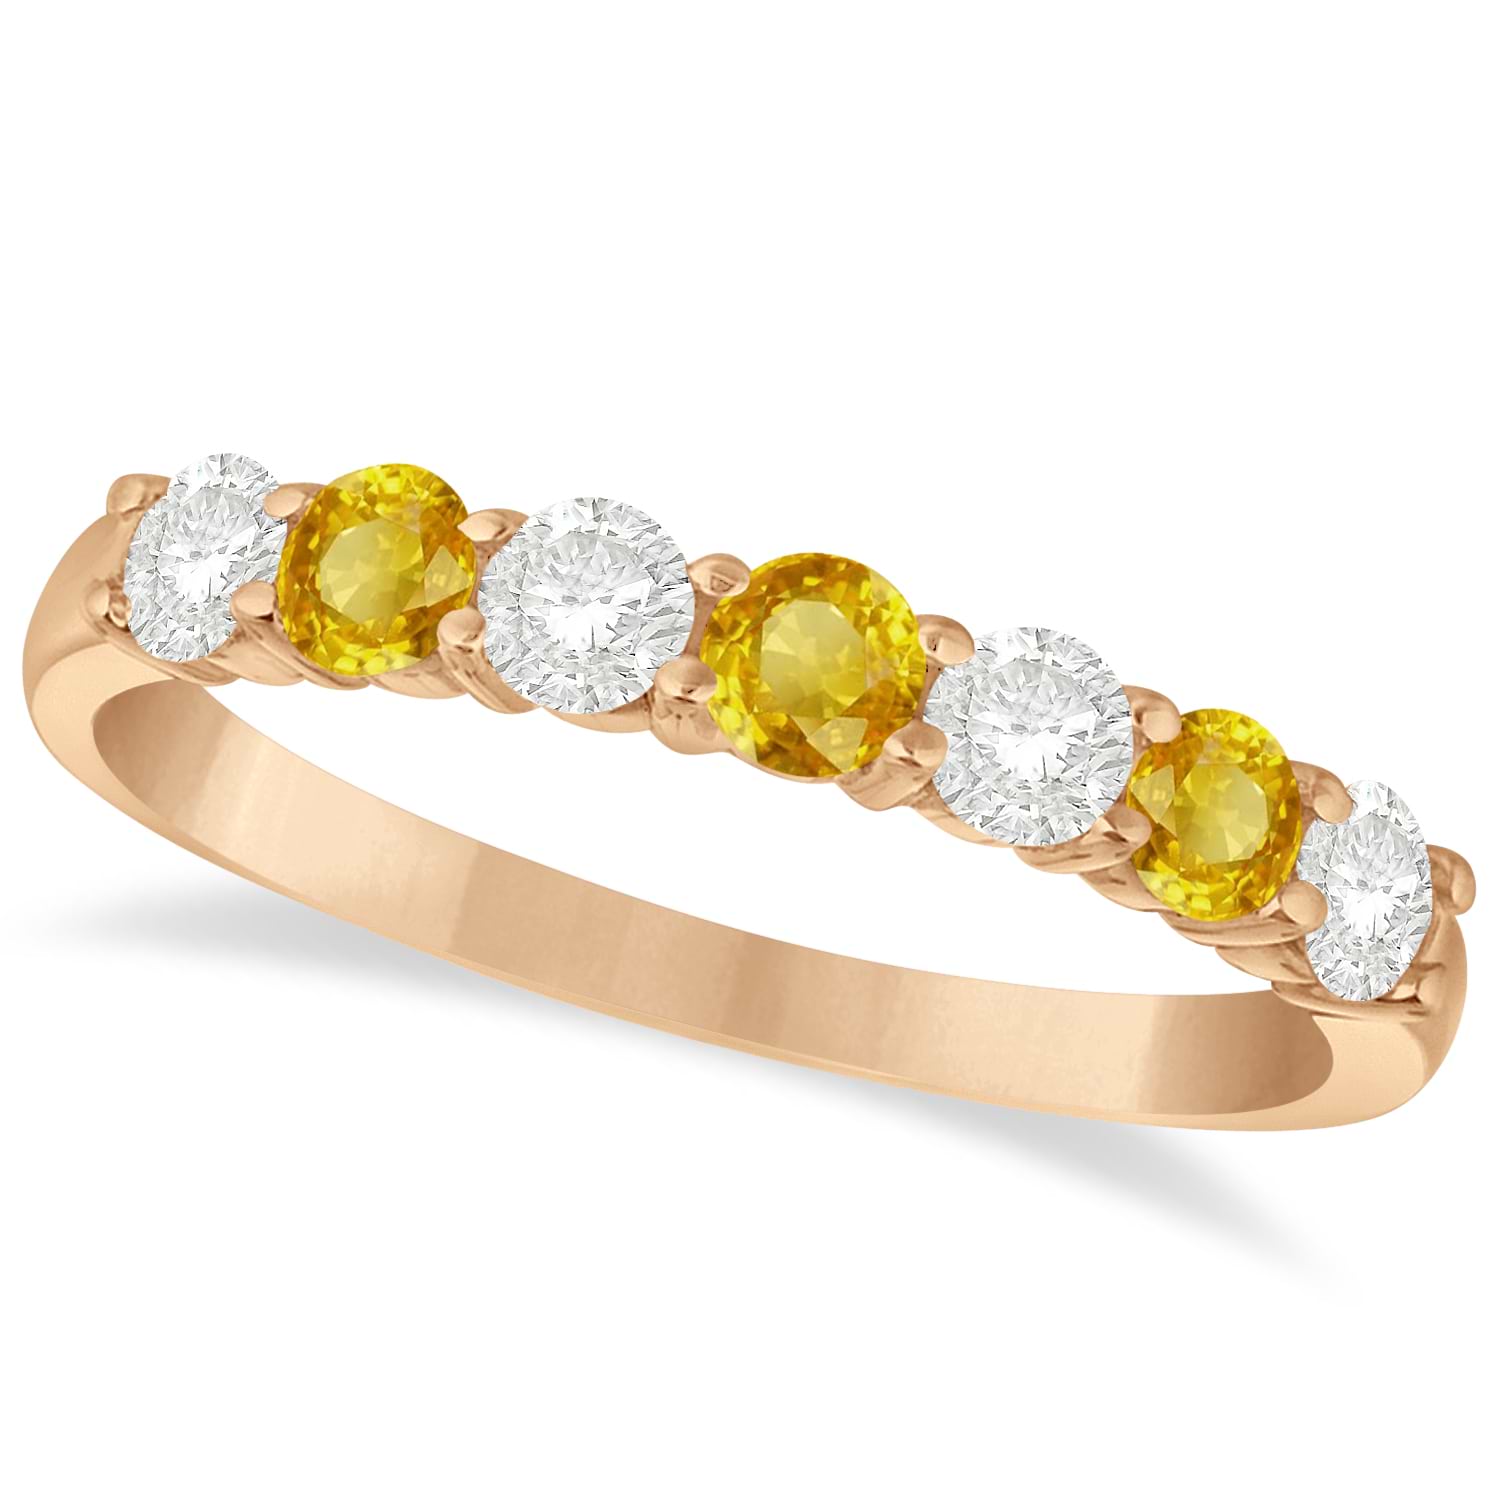 Diamond & Yellow Sapphire 7 Stone Wedding Band 14k Rose Gold (0.75ct)